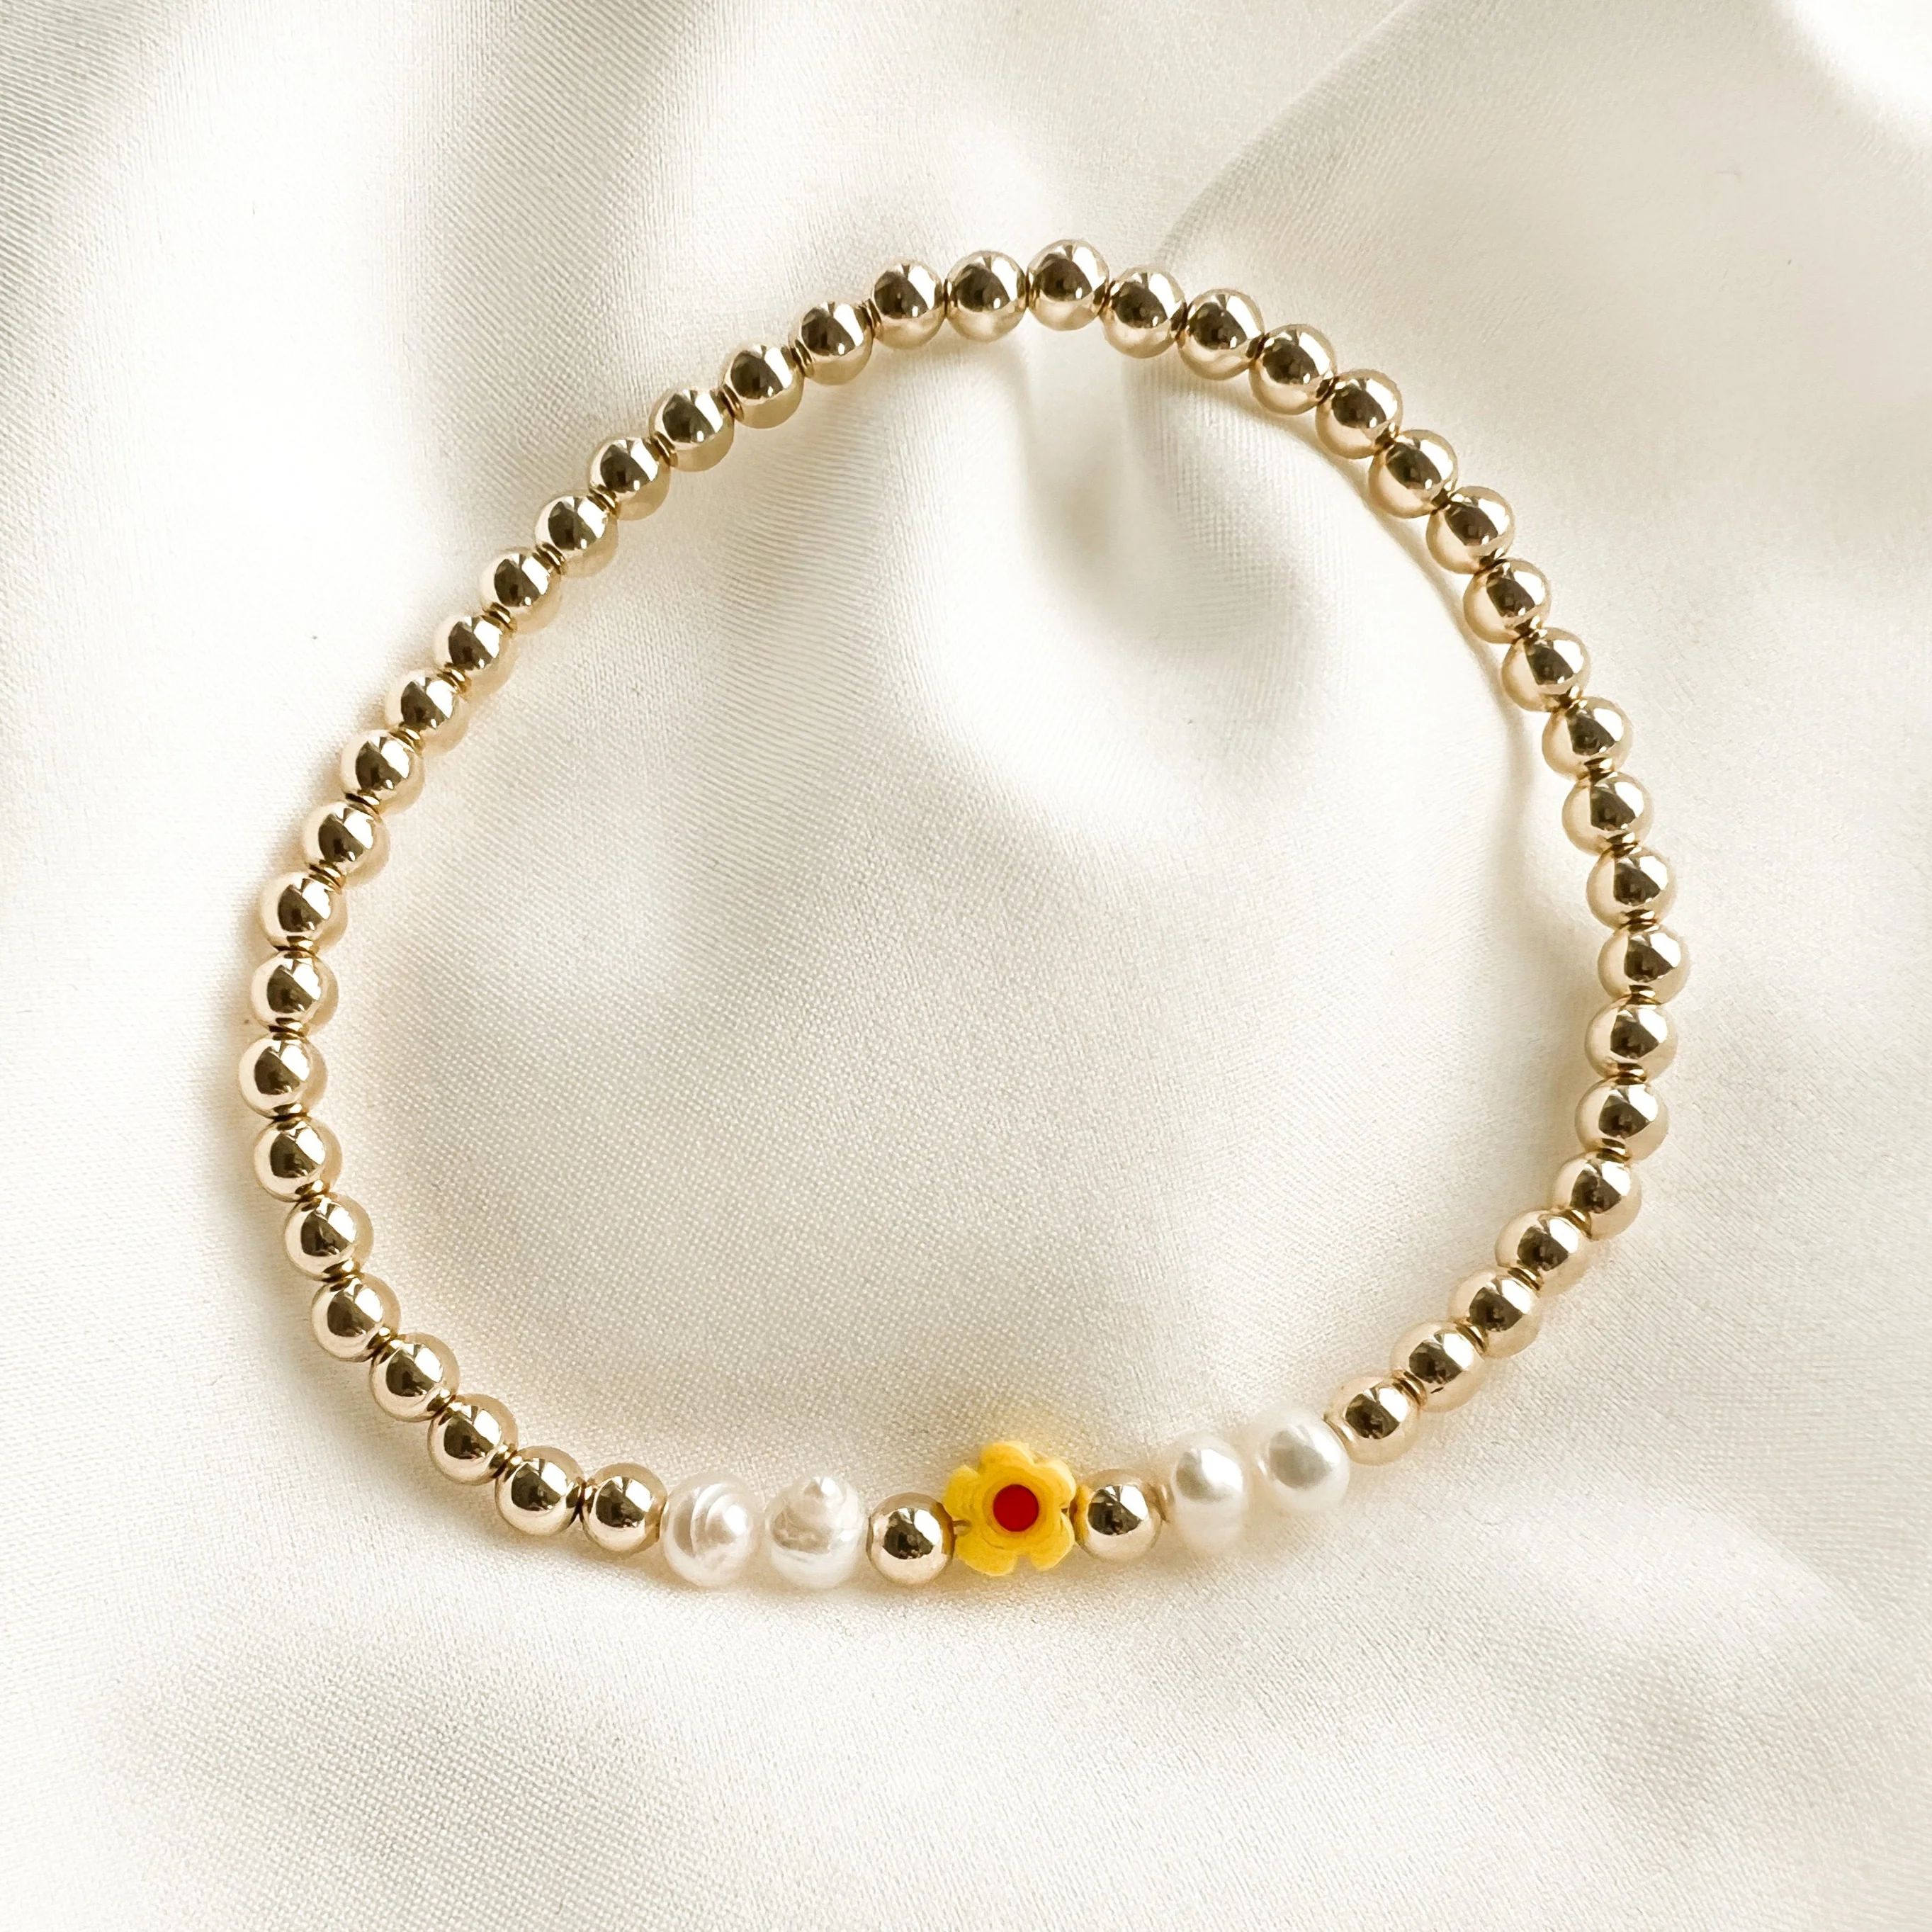 the yellow flower & pearls bracelet | Reef rain aria